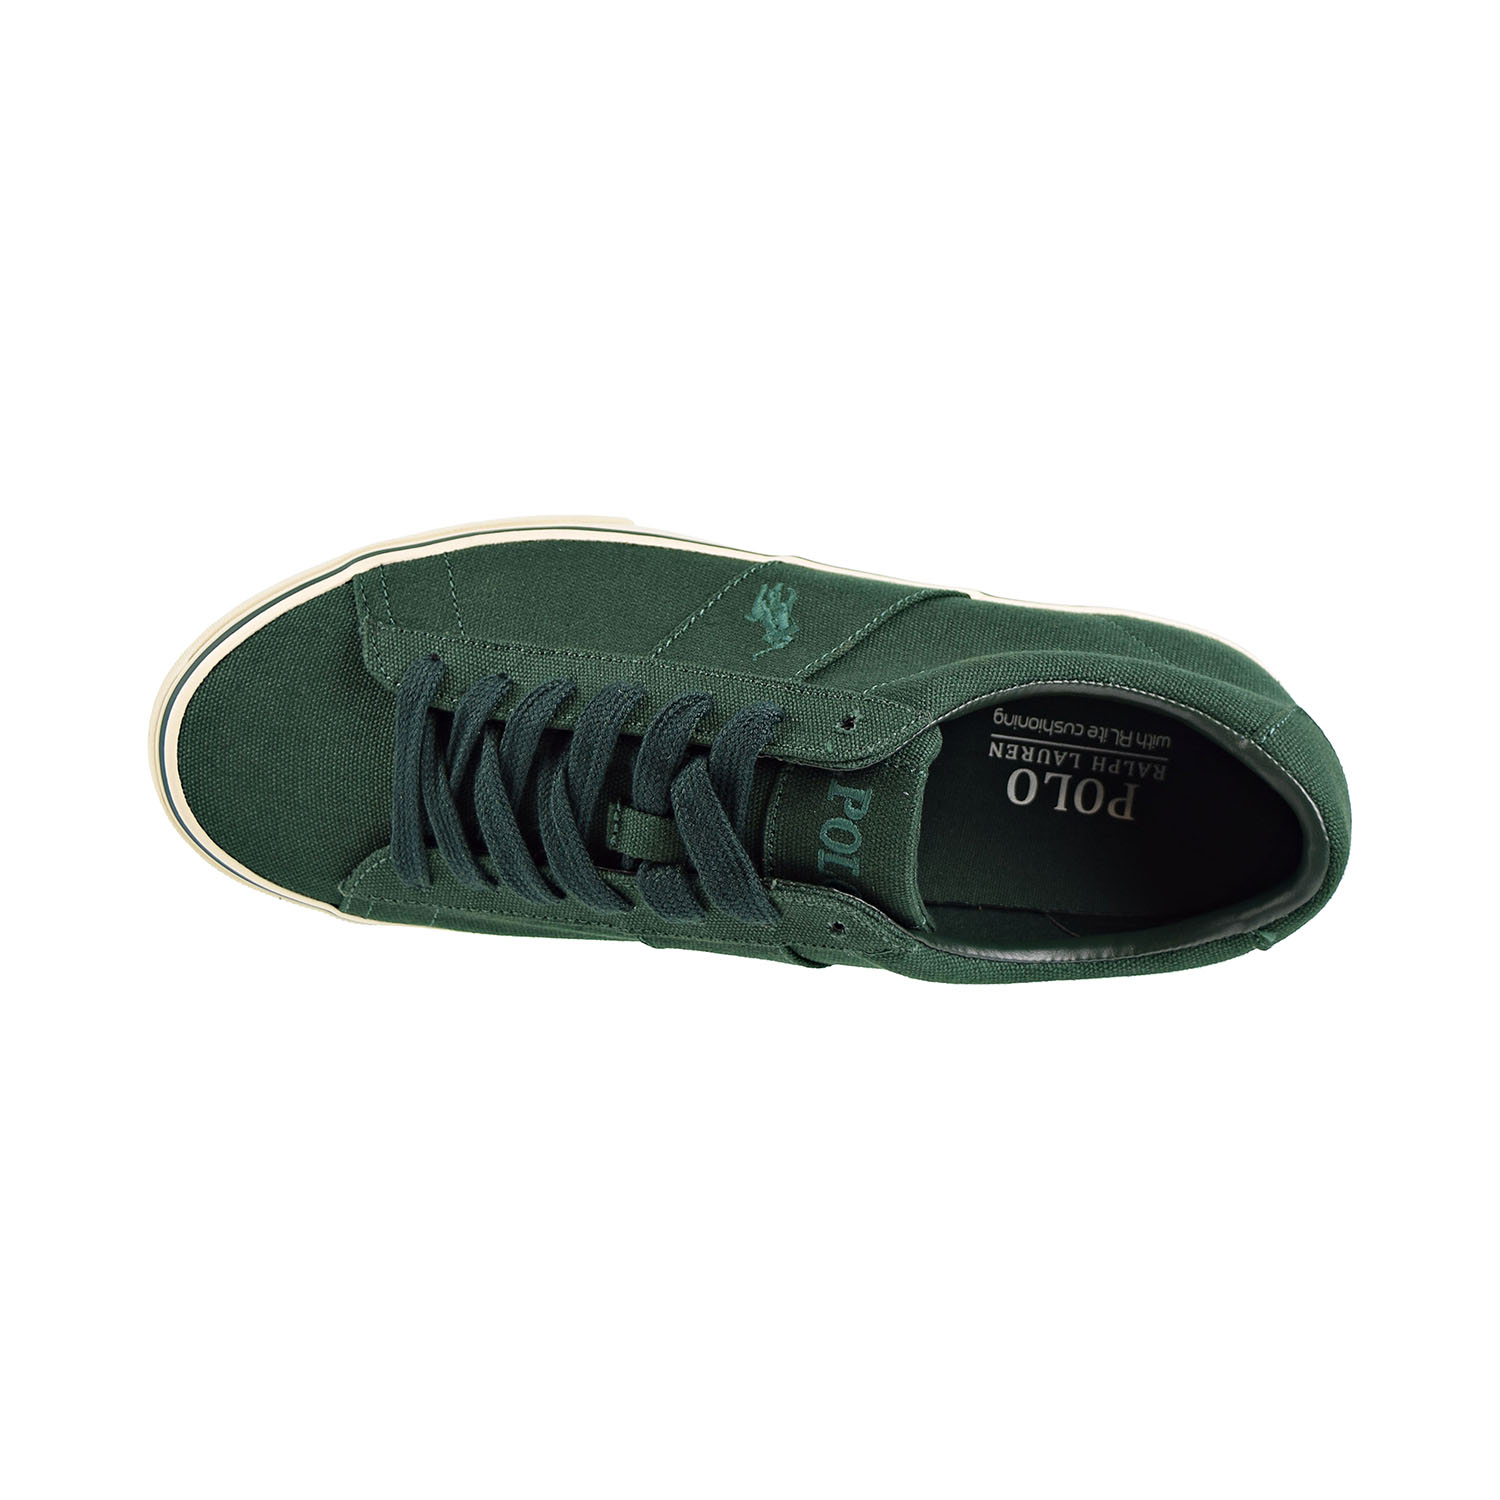 Polo Ralph Lauren Sayer Men's Shoes Green 816710017-002 - image 5 of 6